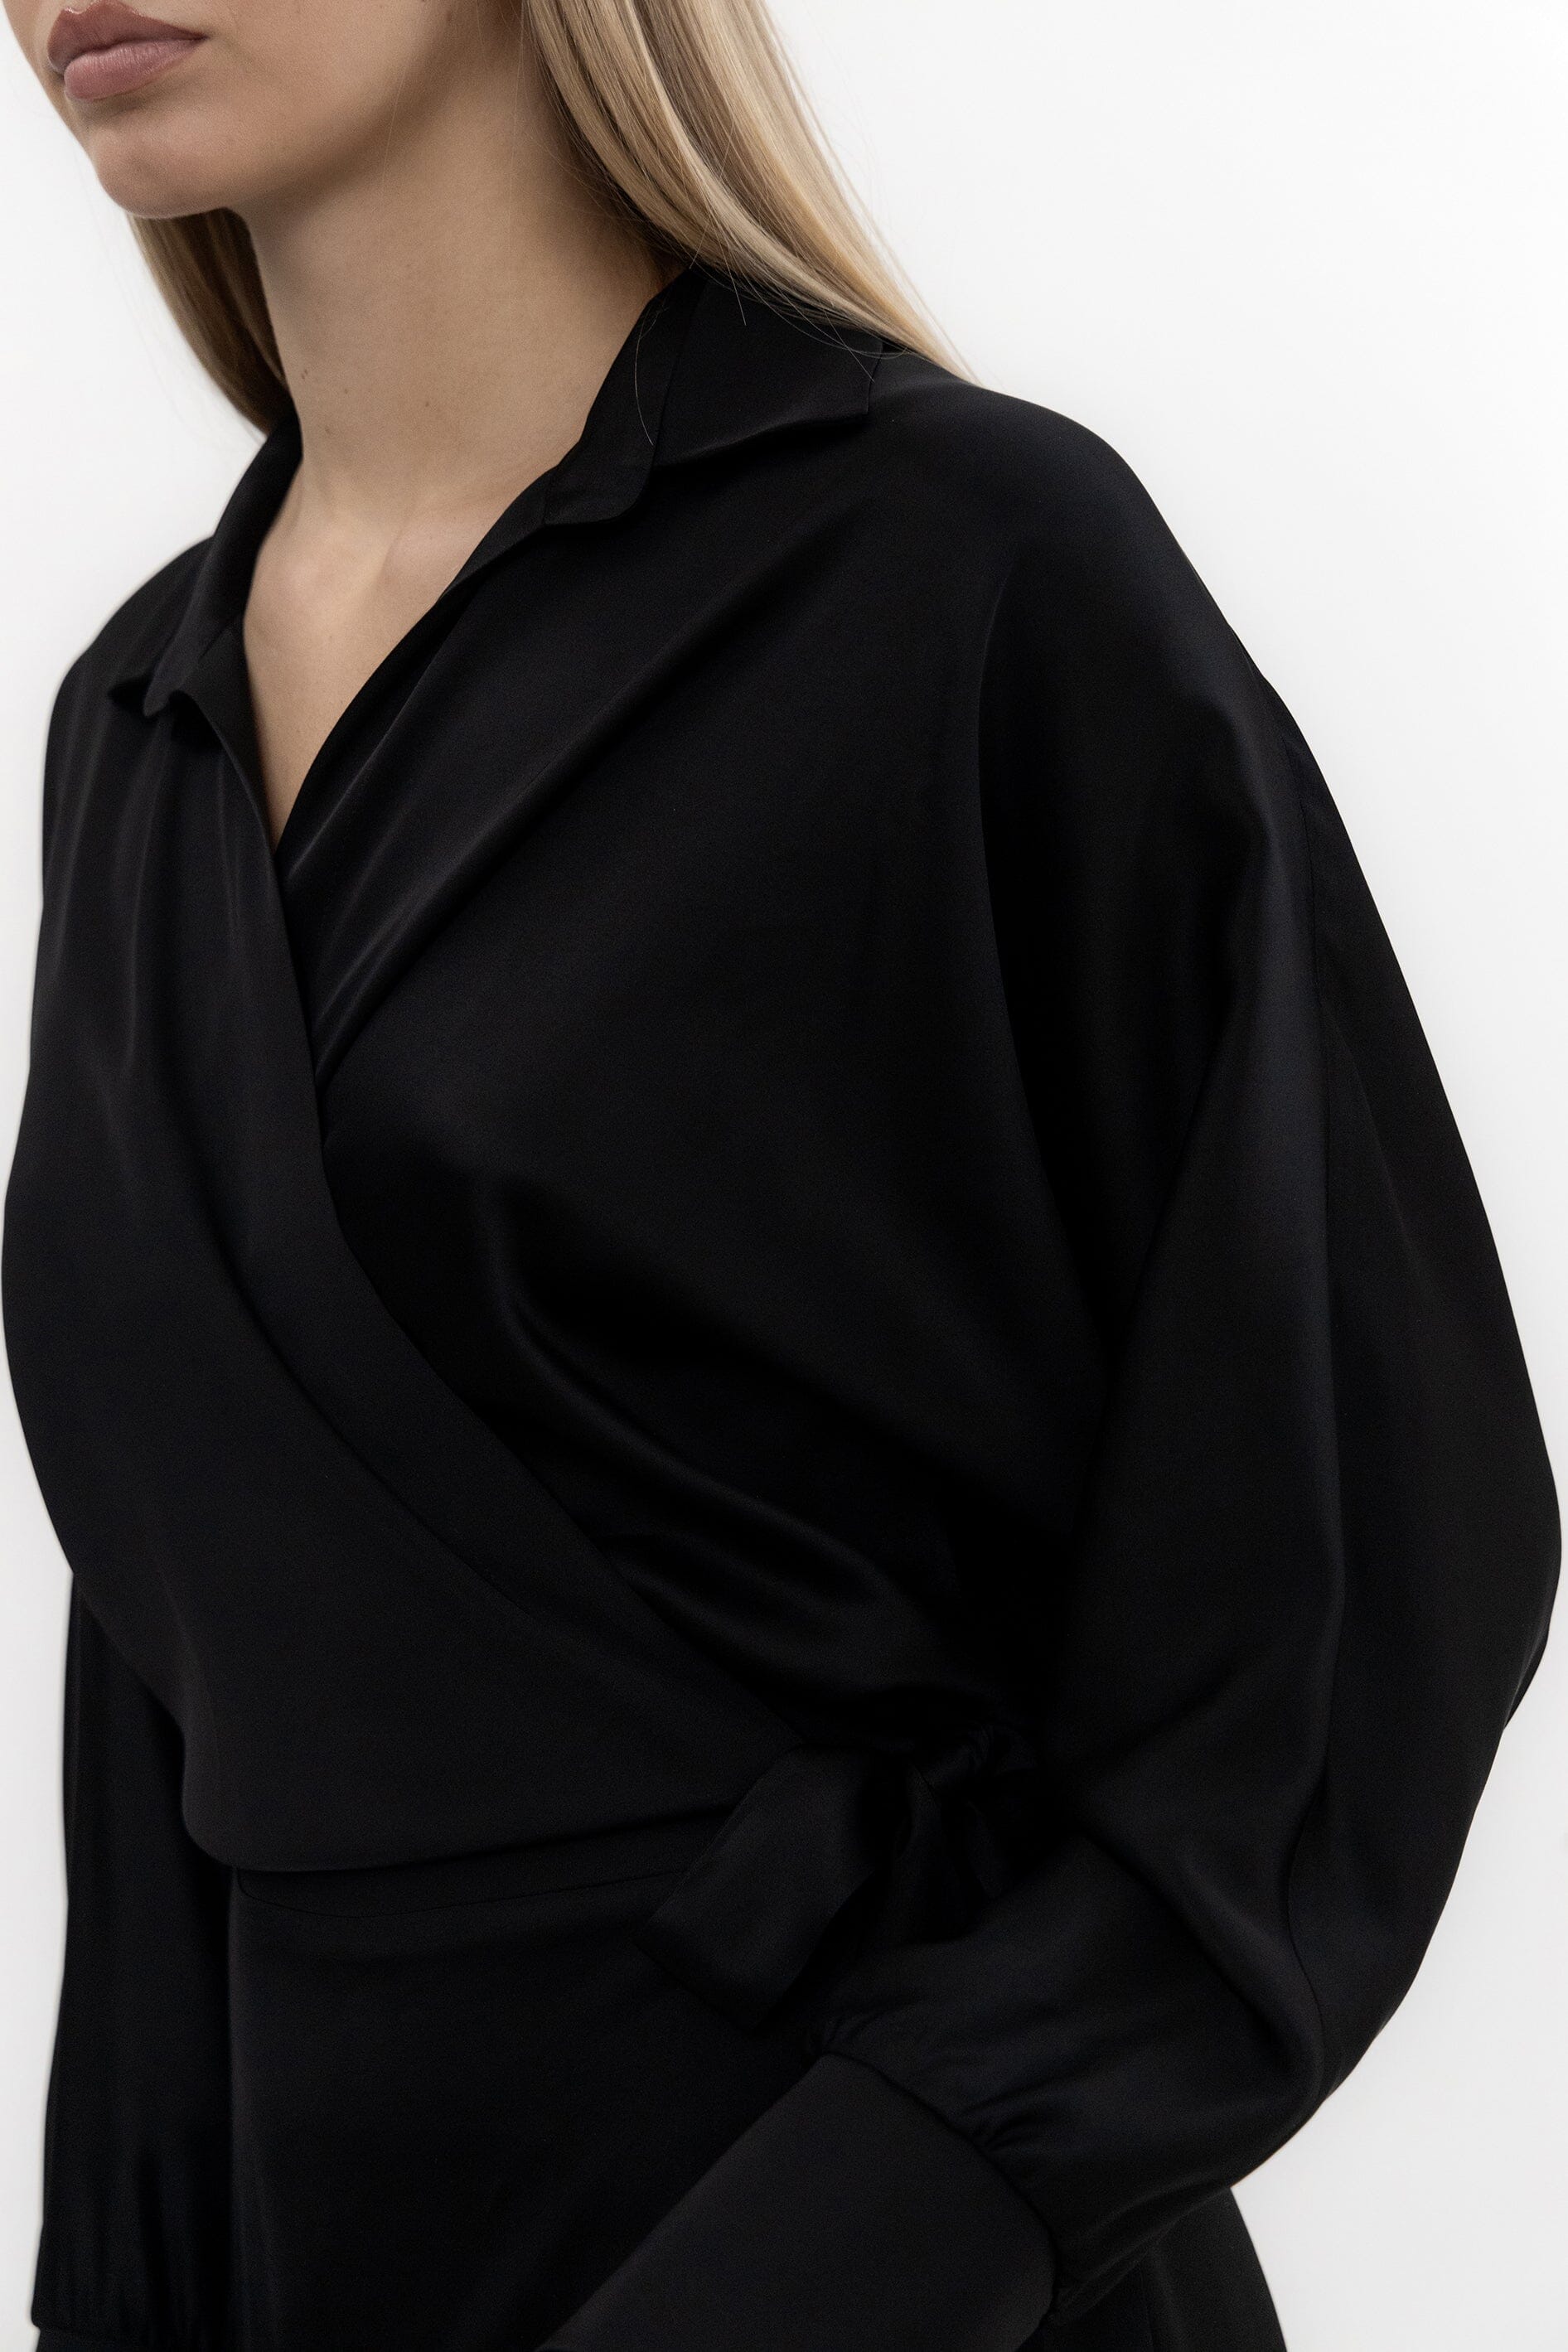  Captivating Love Wrap Dress Black Product Amoralle